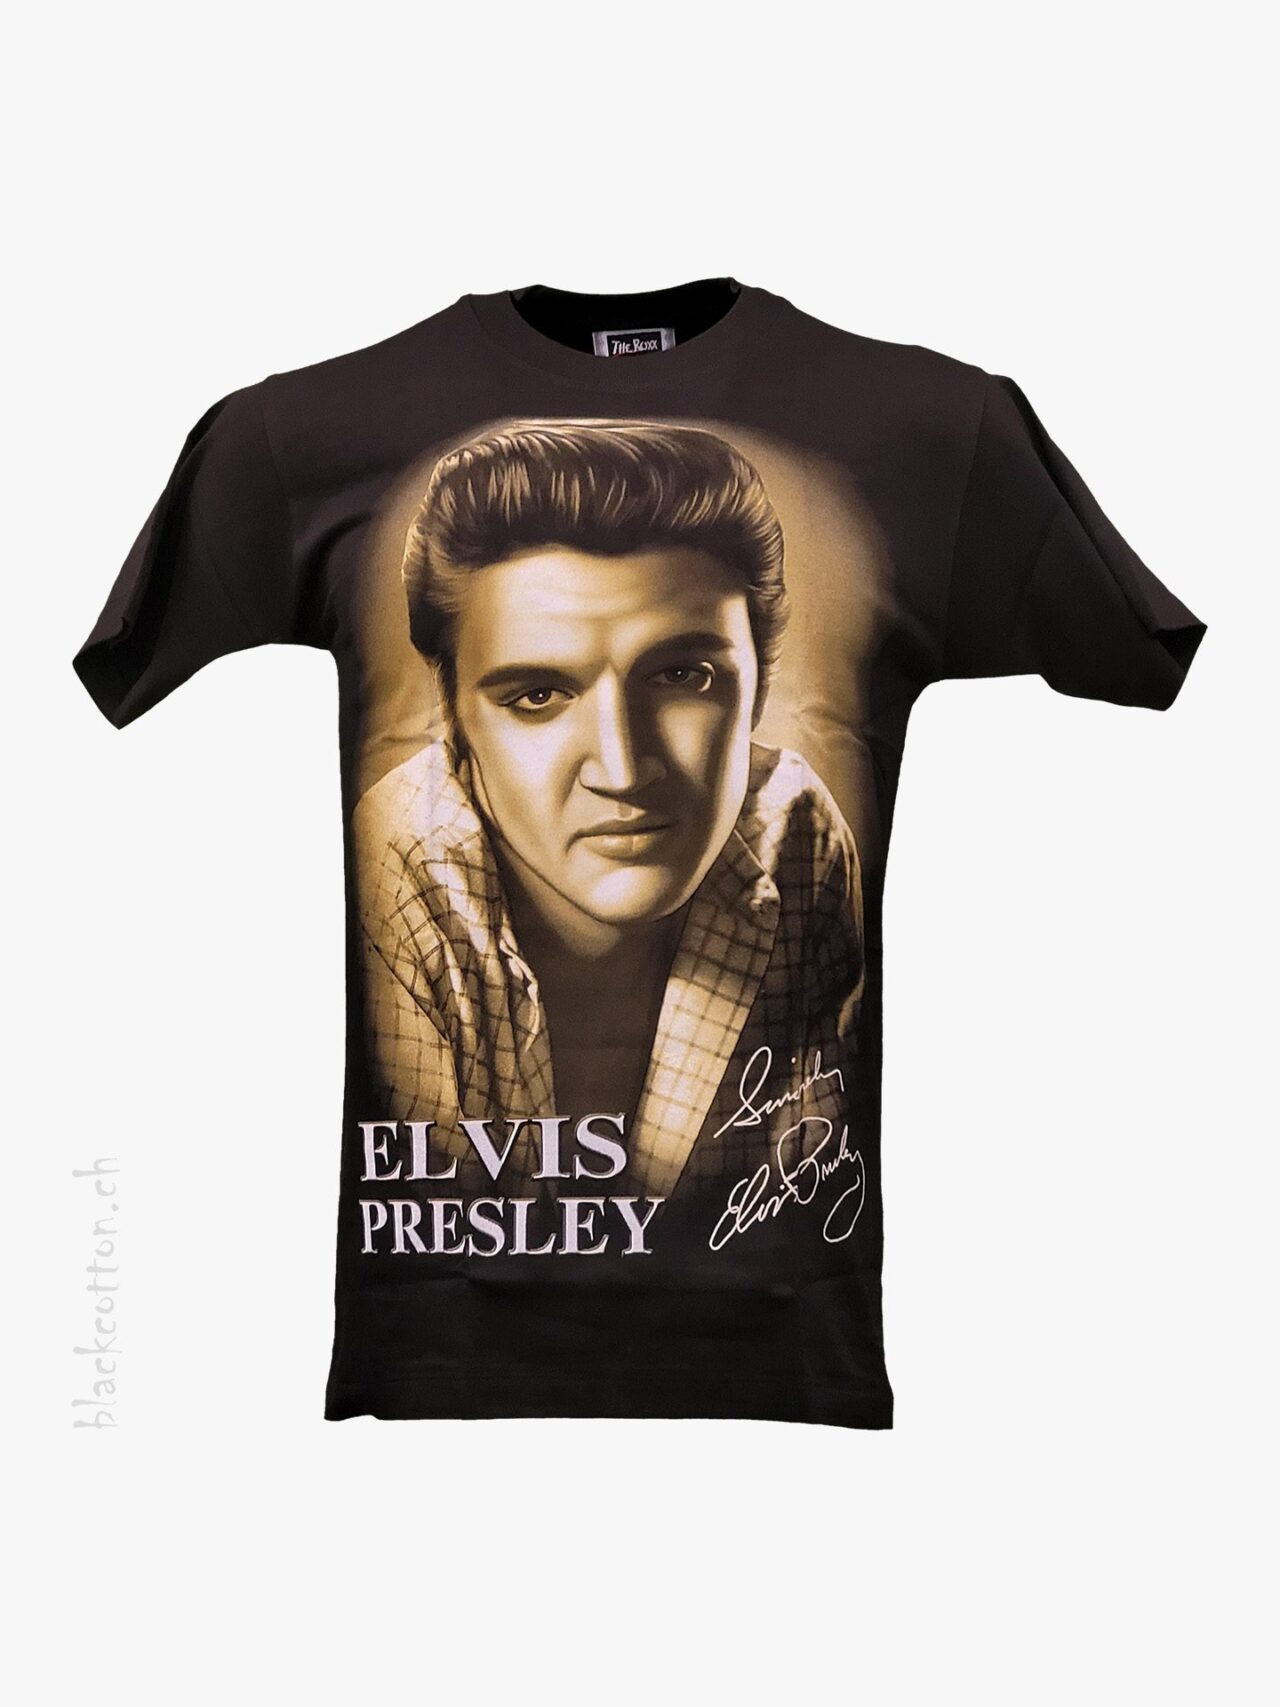 Elvis Presley - Rock & Roll Singer - 1935 - 1977 T-Shirt